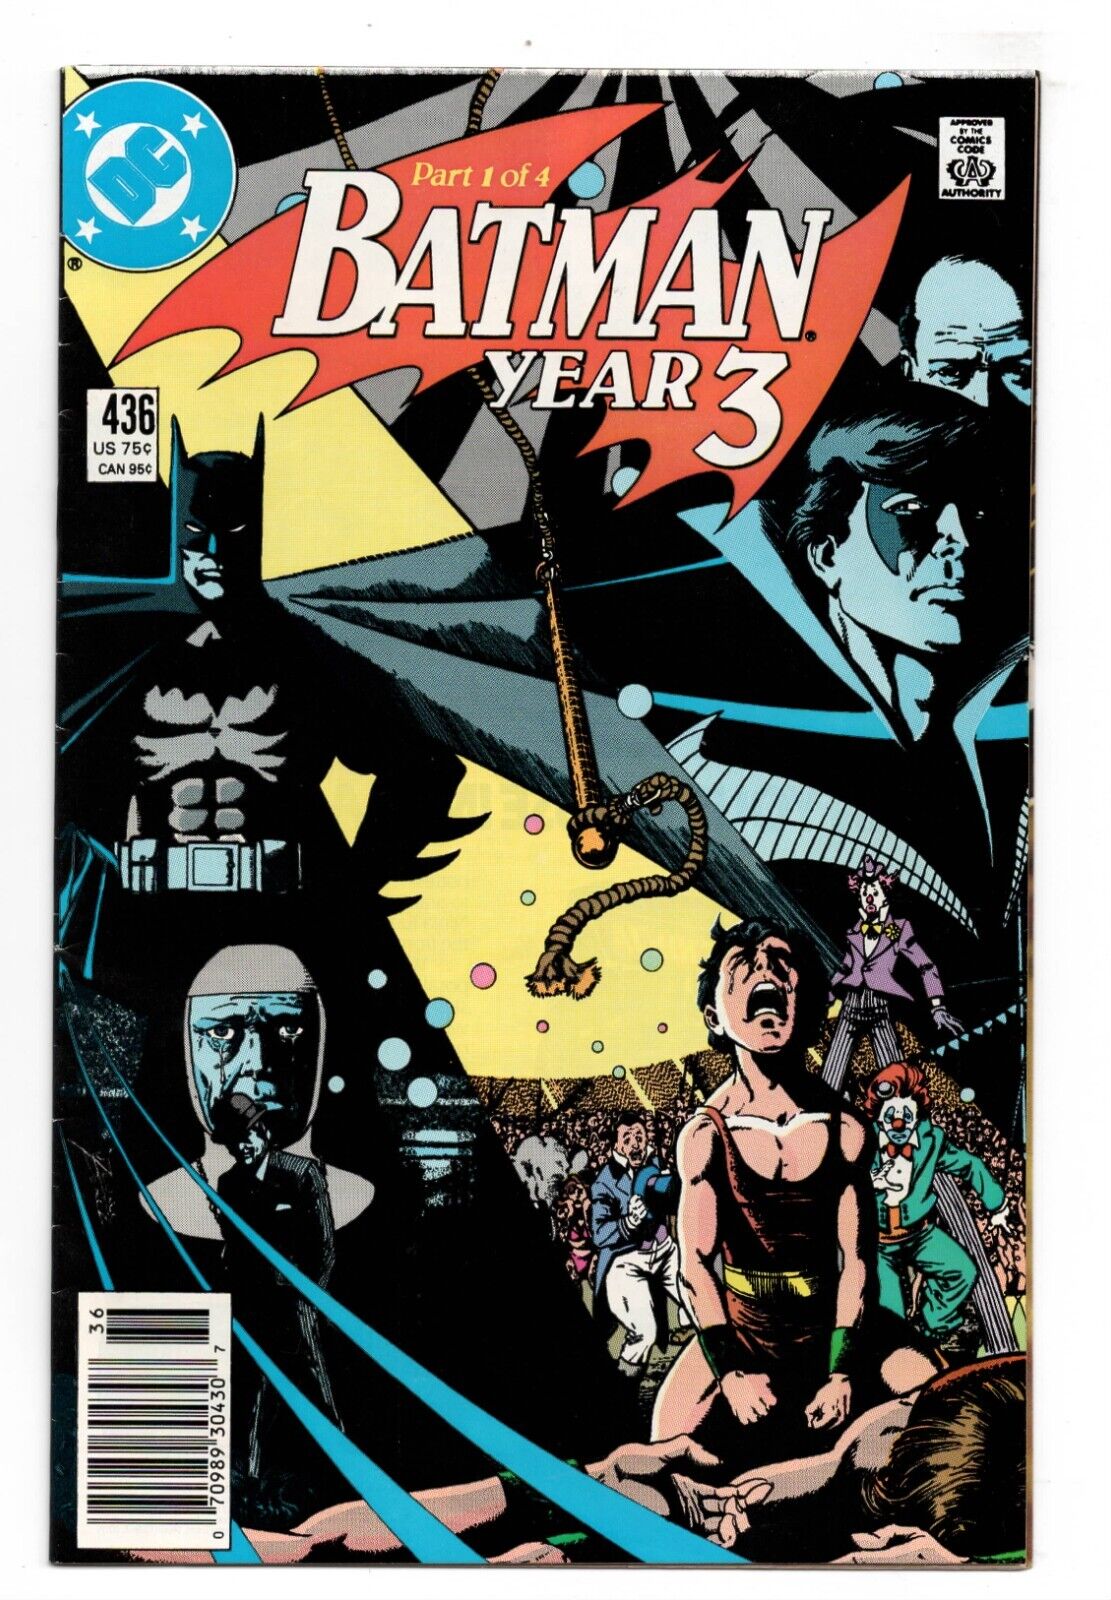 BATMAN #436 - AUG 1989, DC COMICS - BATMAN: YEAR THREE